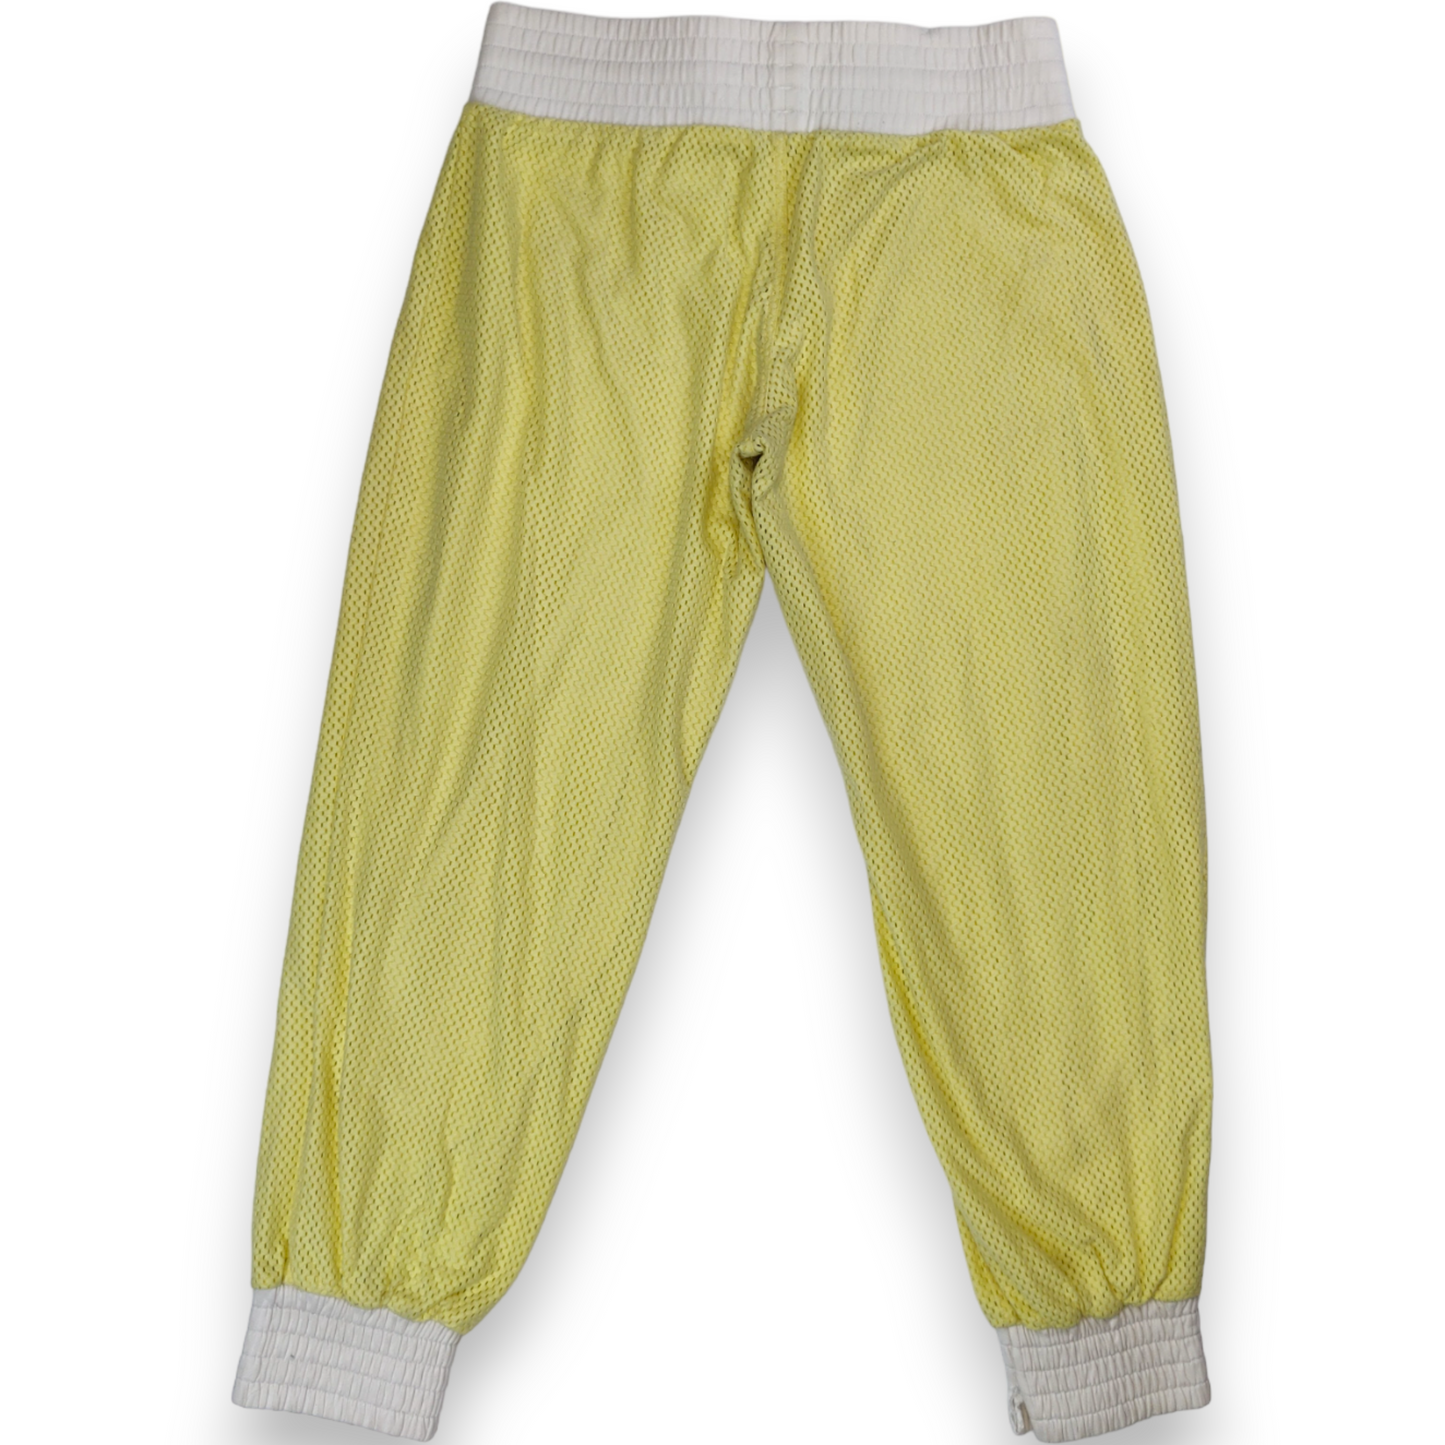 Adidas Vintage Yellow Mesh Sweatpants Joggers Track Pants Women Size UK 16